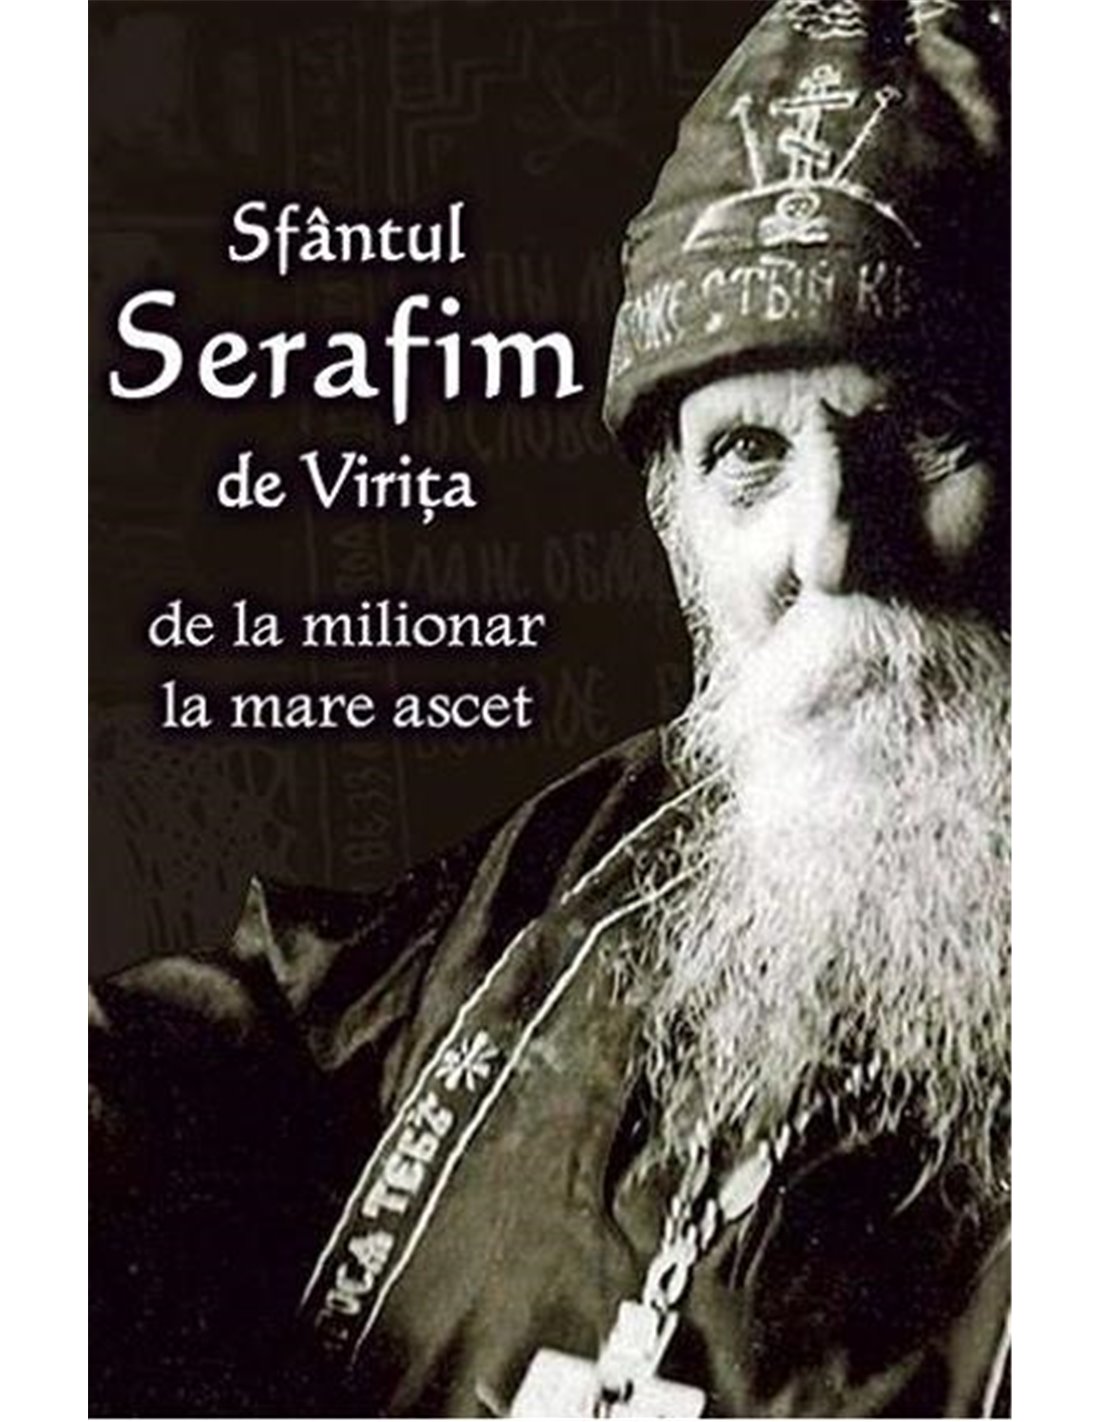 Sfantul Serafim de Virita. De la milionar la mare ascet | Editura Ortodoxia